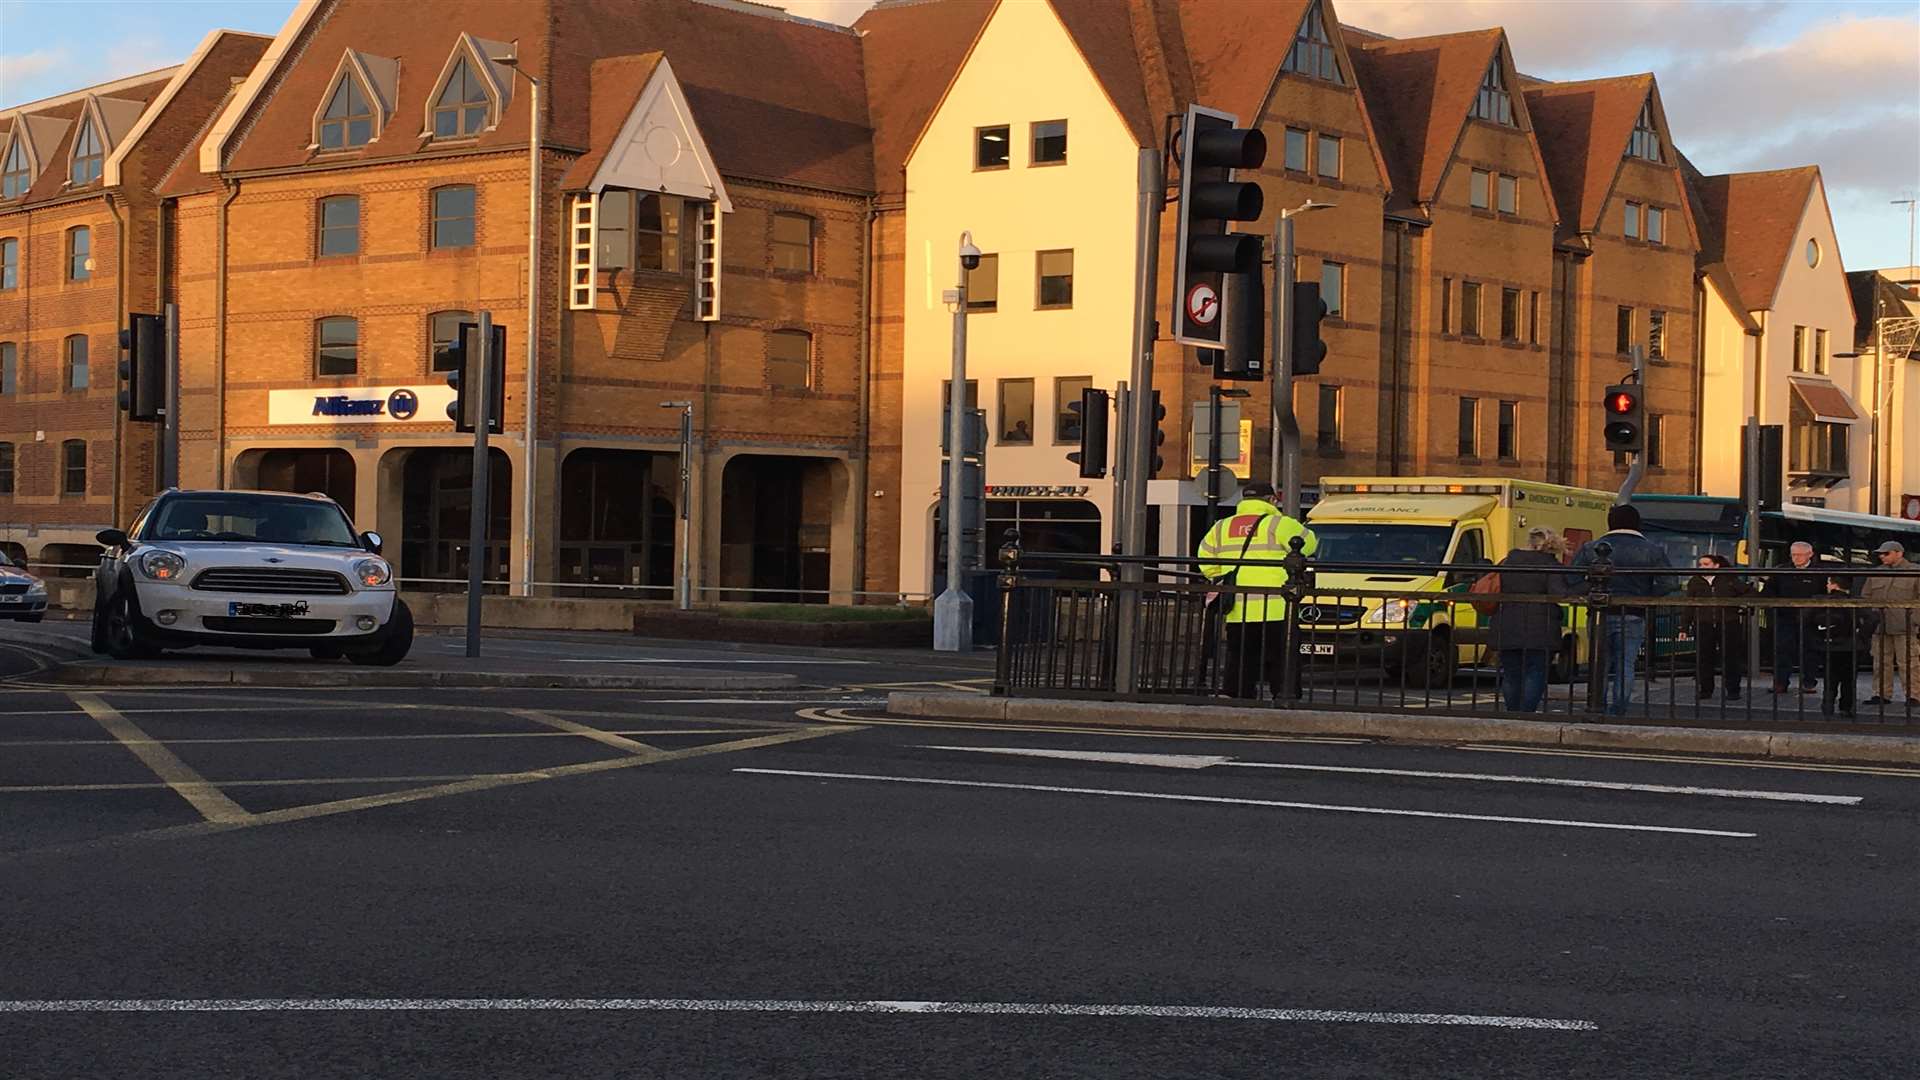 The scene of the crash in Maidstone town centre